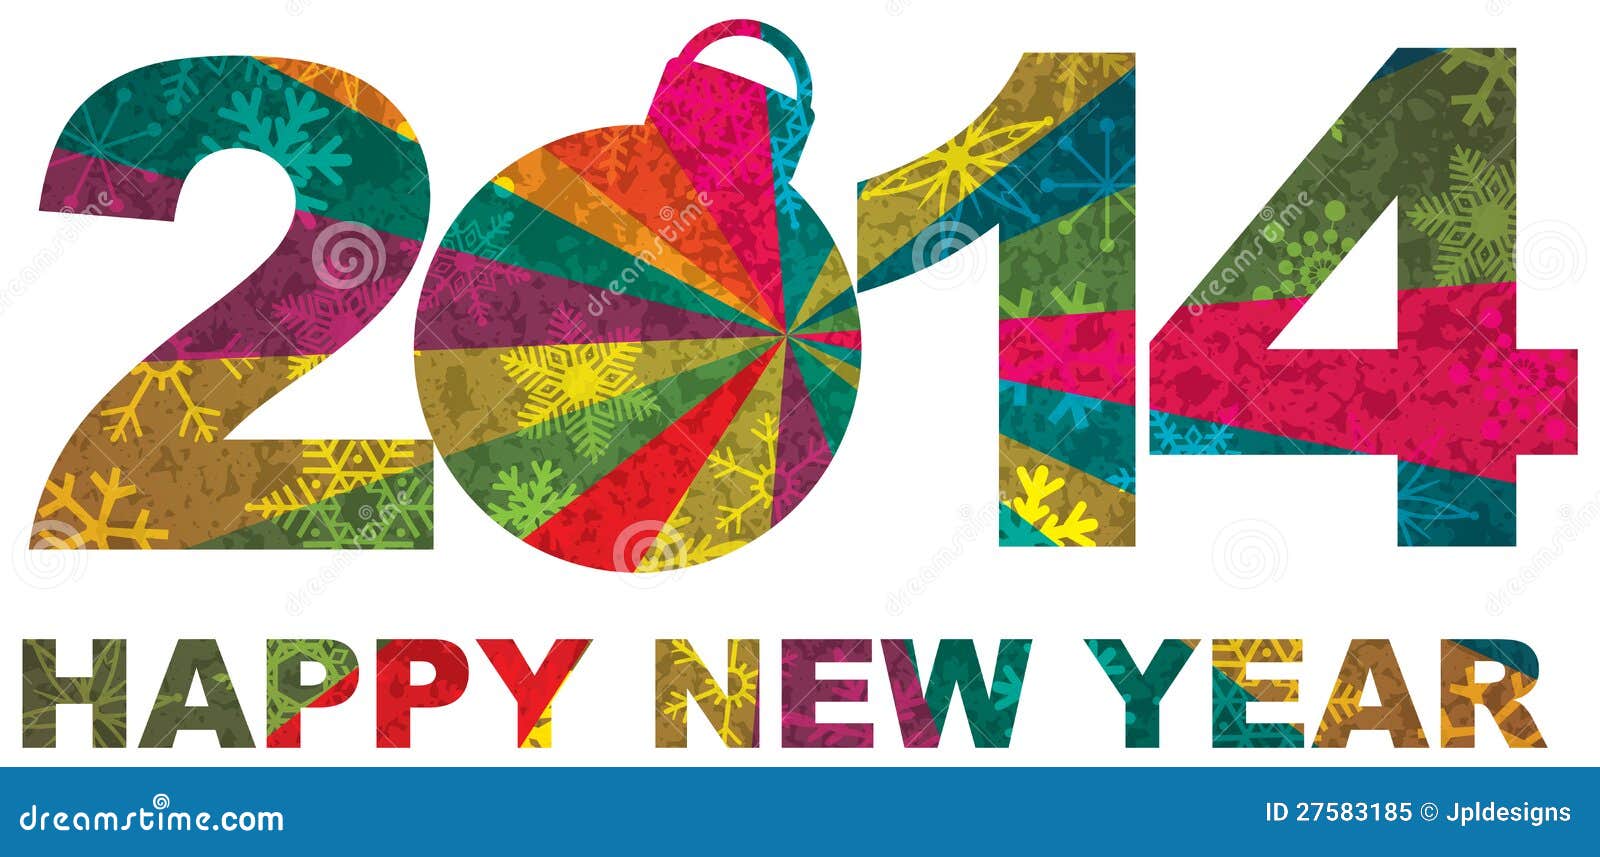 clipart happy new year 2014 - photo #34